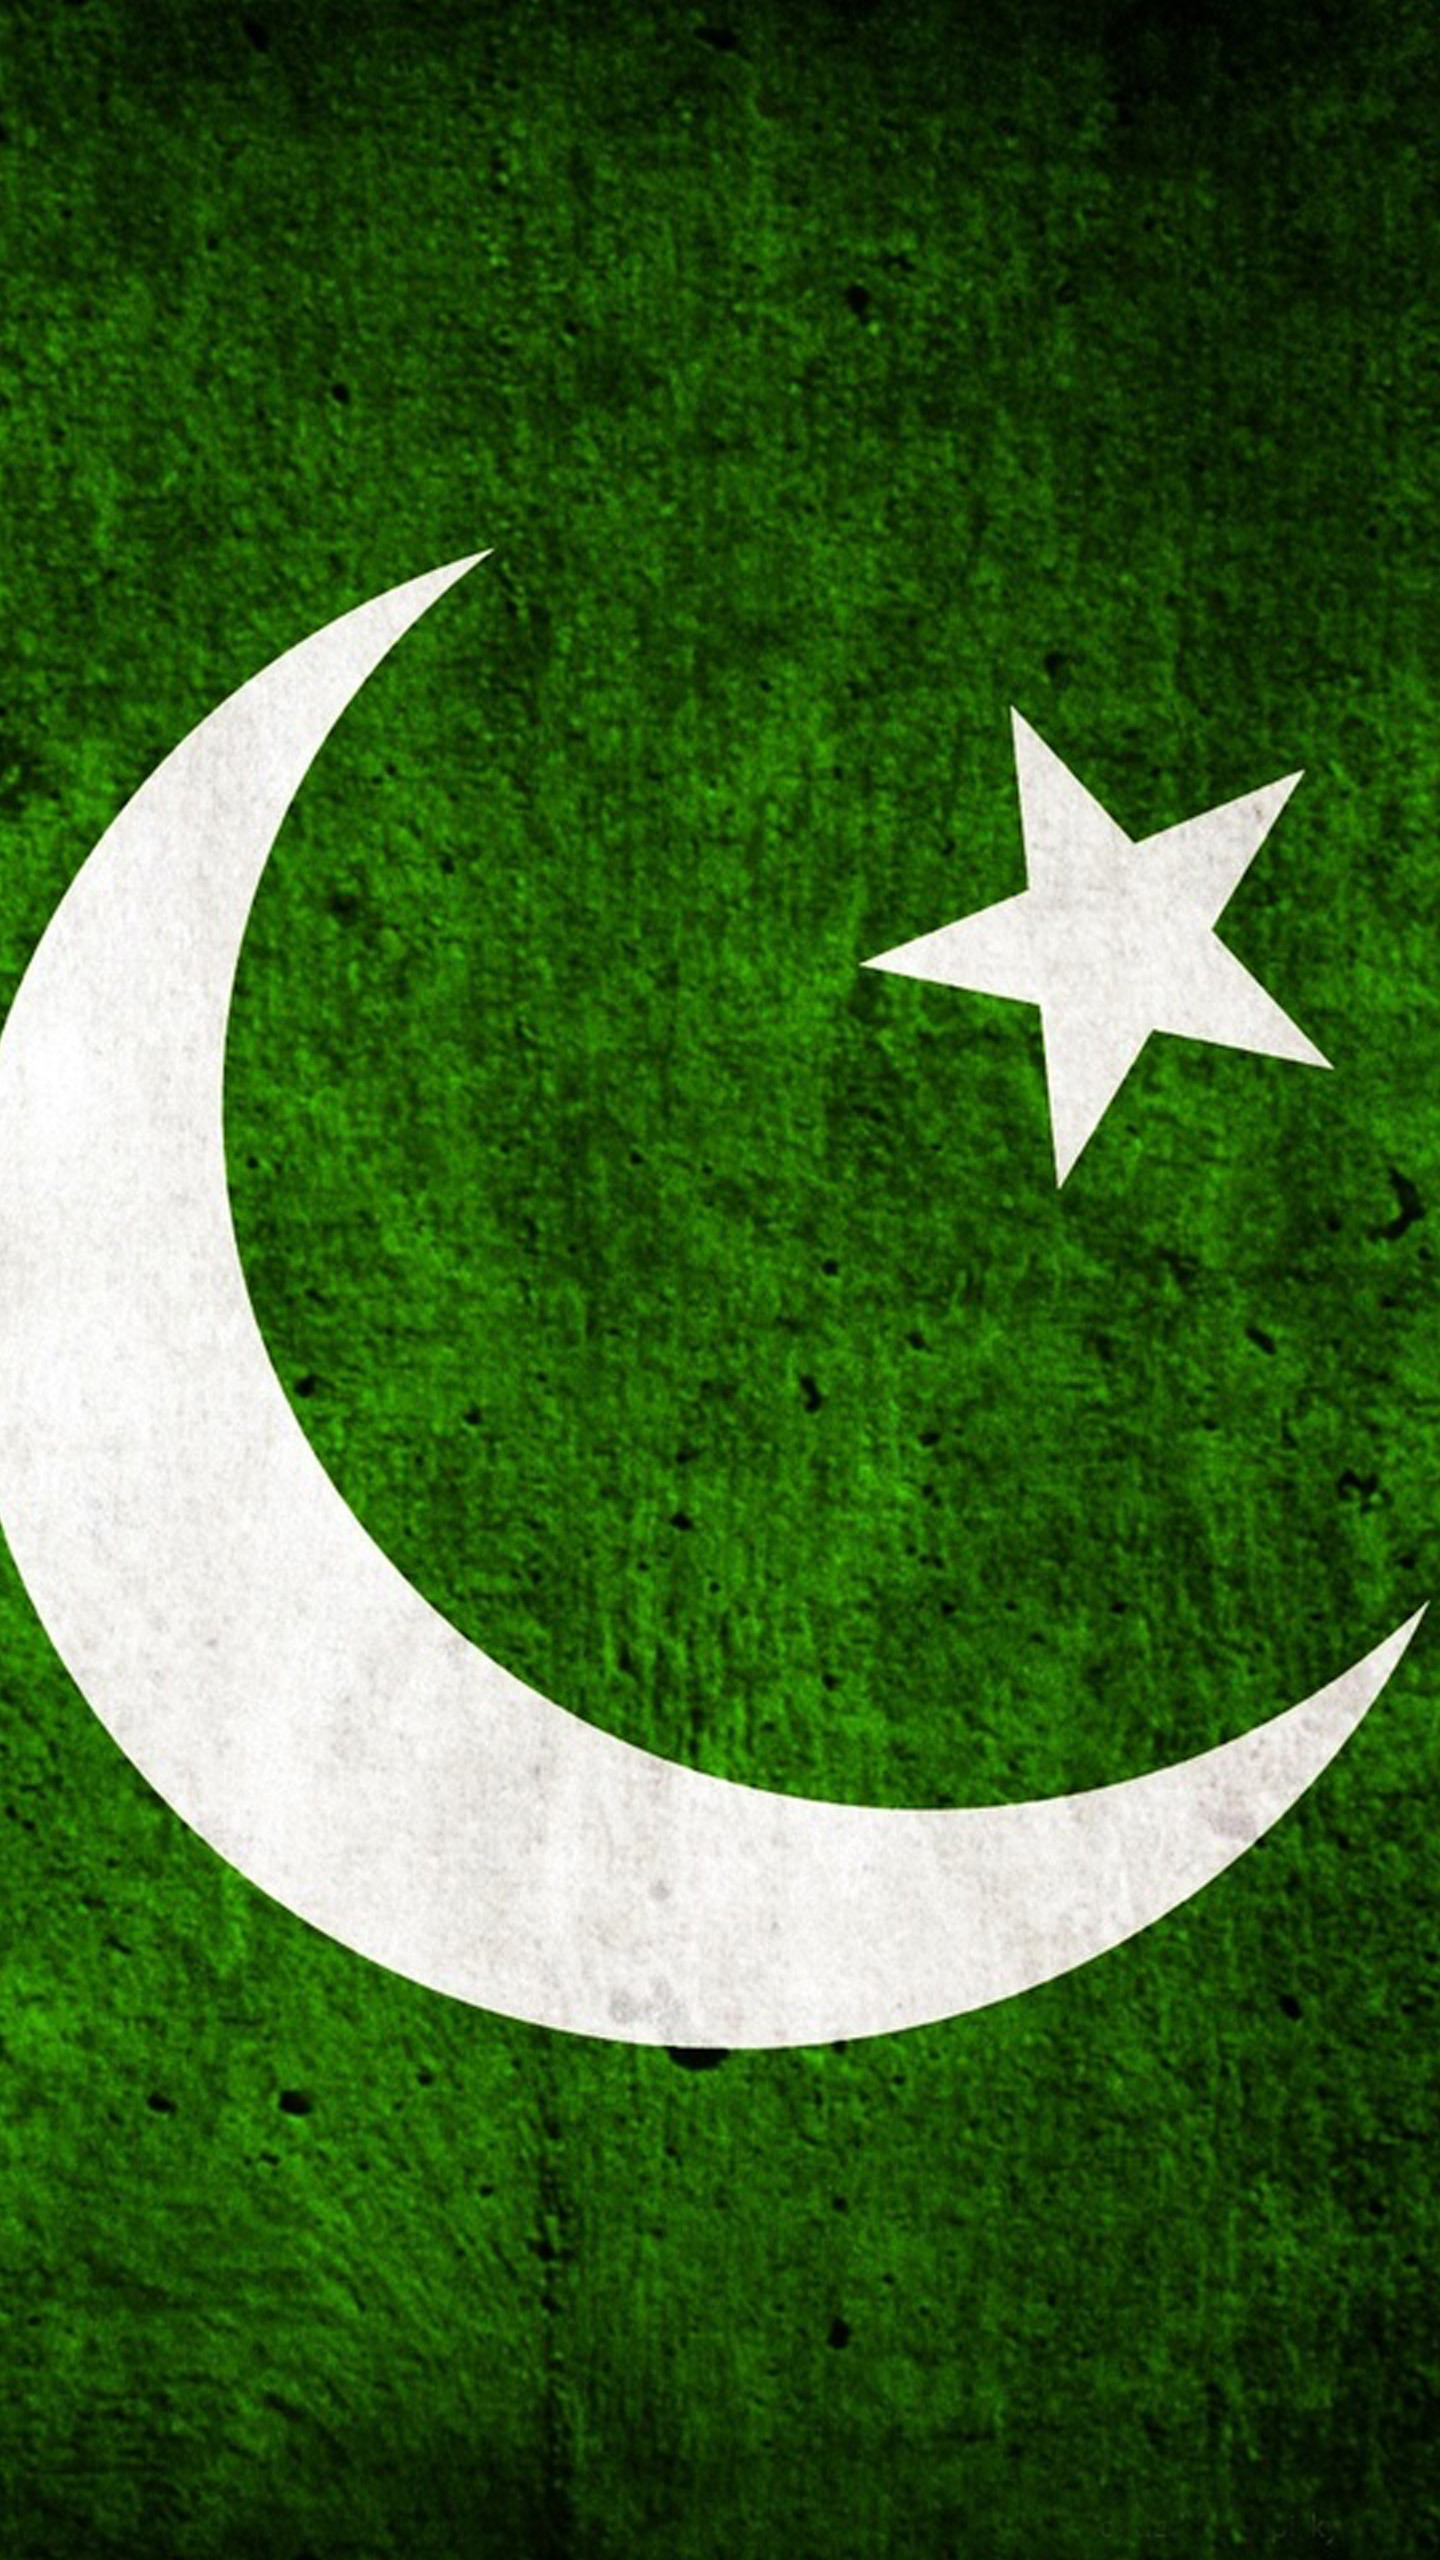 pakistan flag wallpaper,green,crescent,grass,illustration,plant